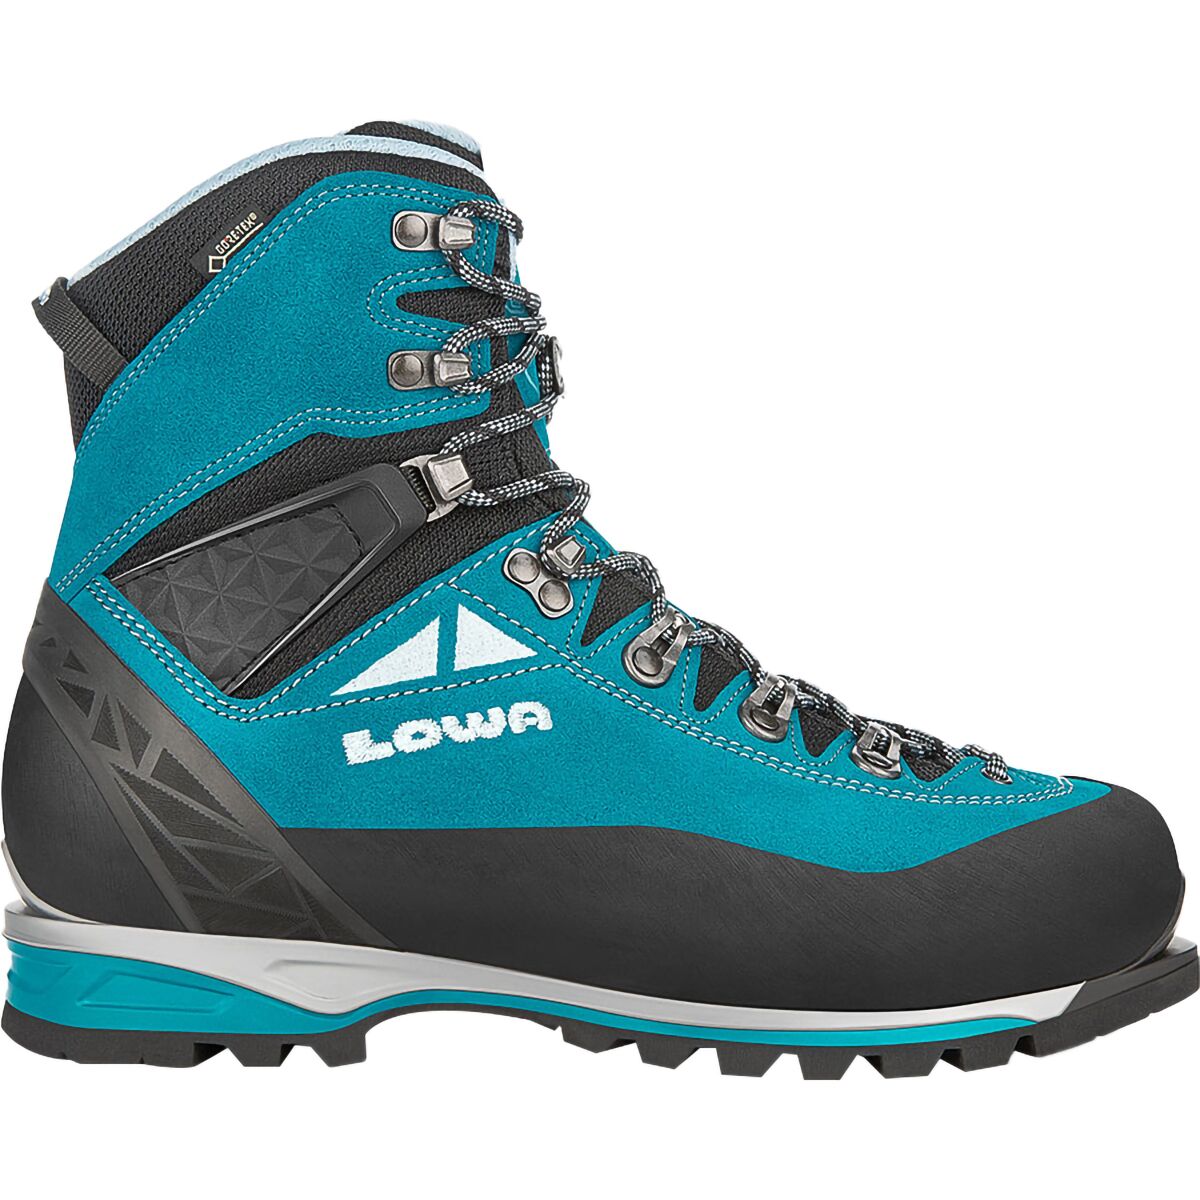 Lowa Alpine Expert GTX Mountaineering Boot - Women's